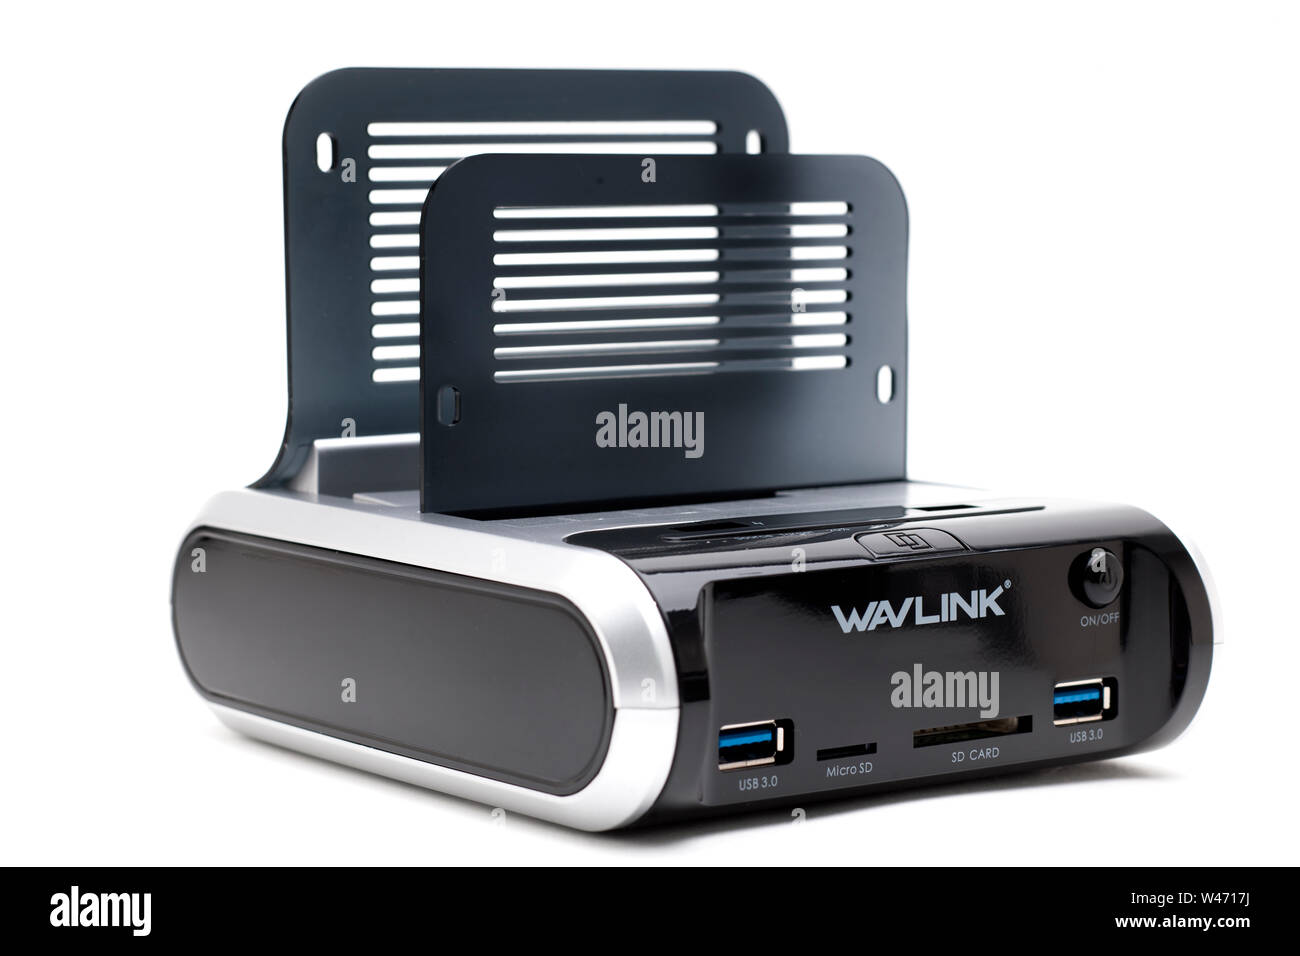 Wavlink USB 3.0 Hard Drive Docking Station Stock Photo